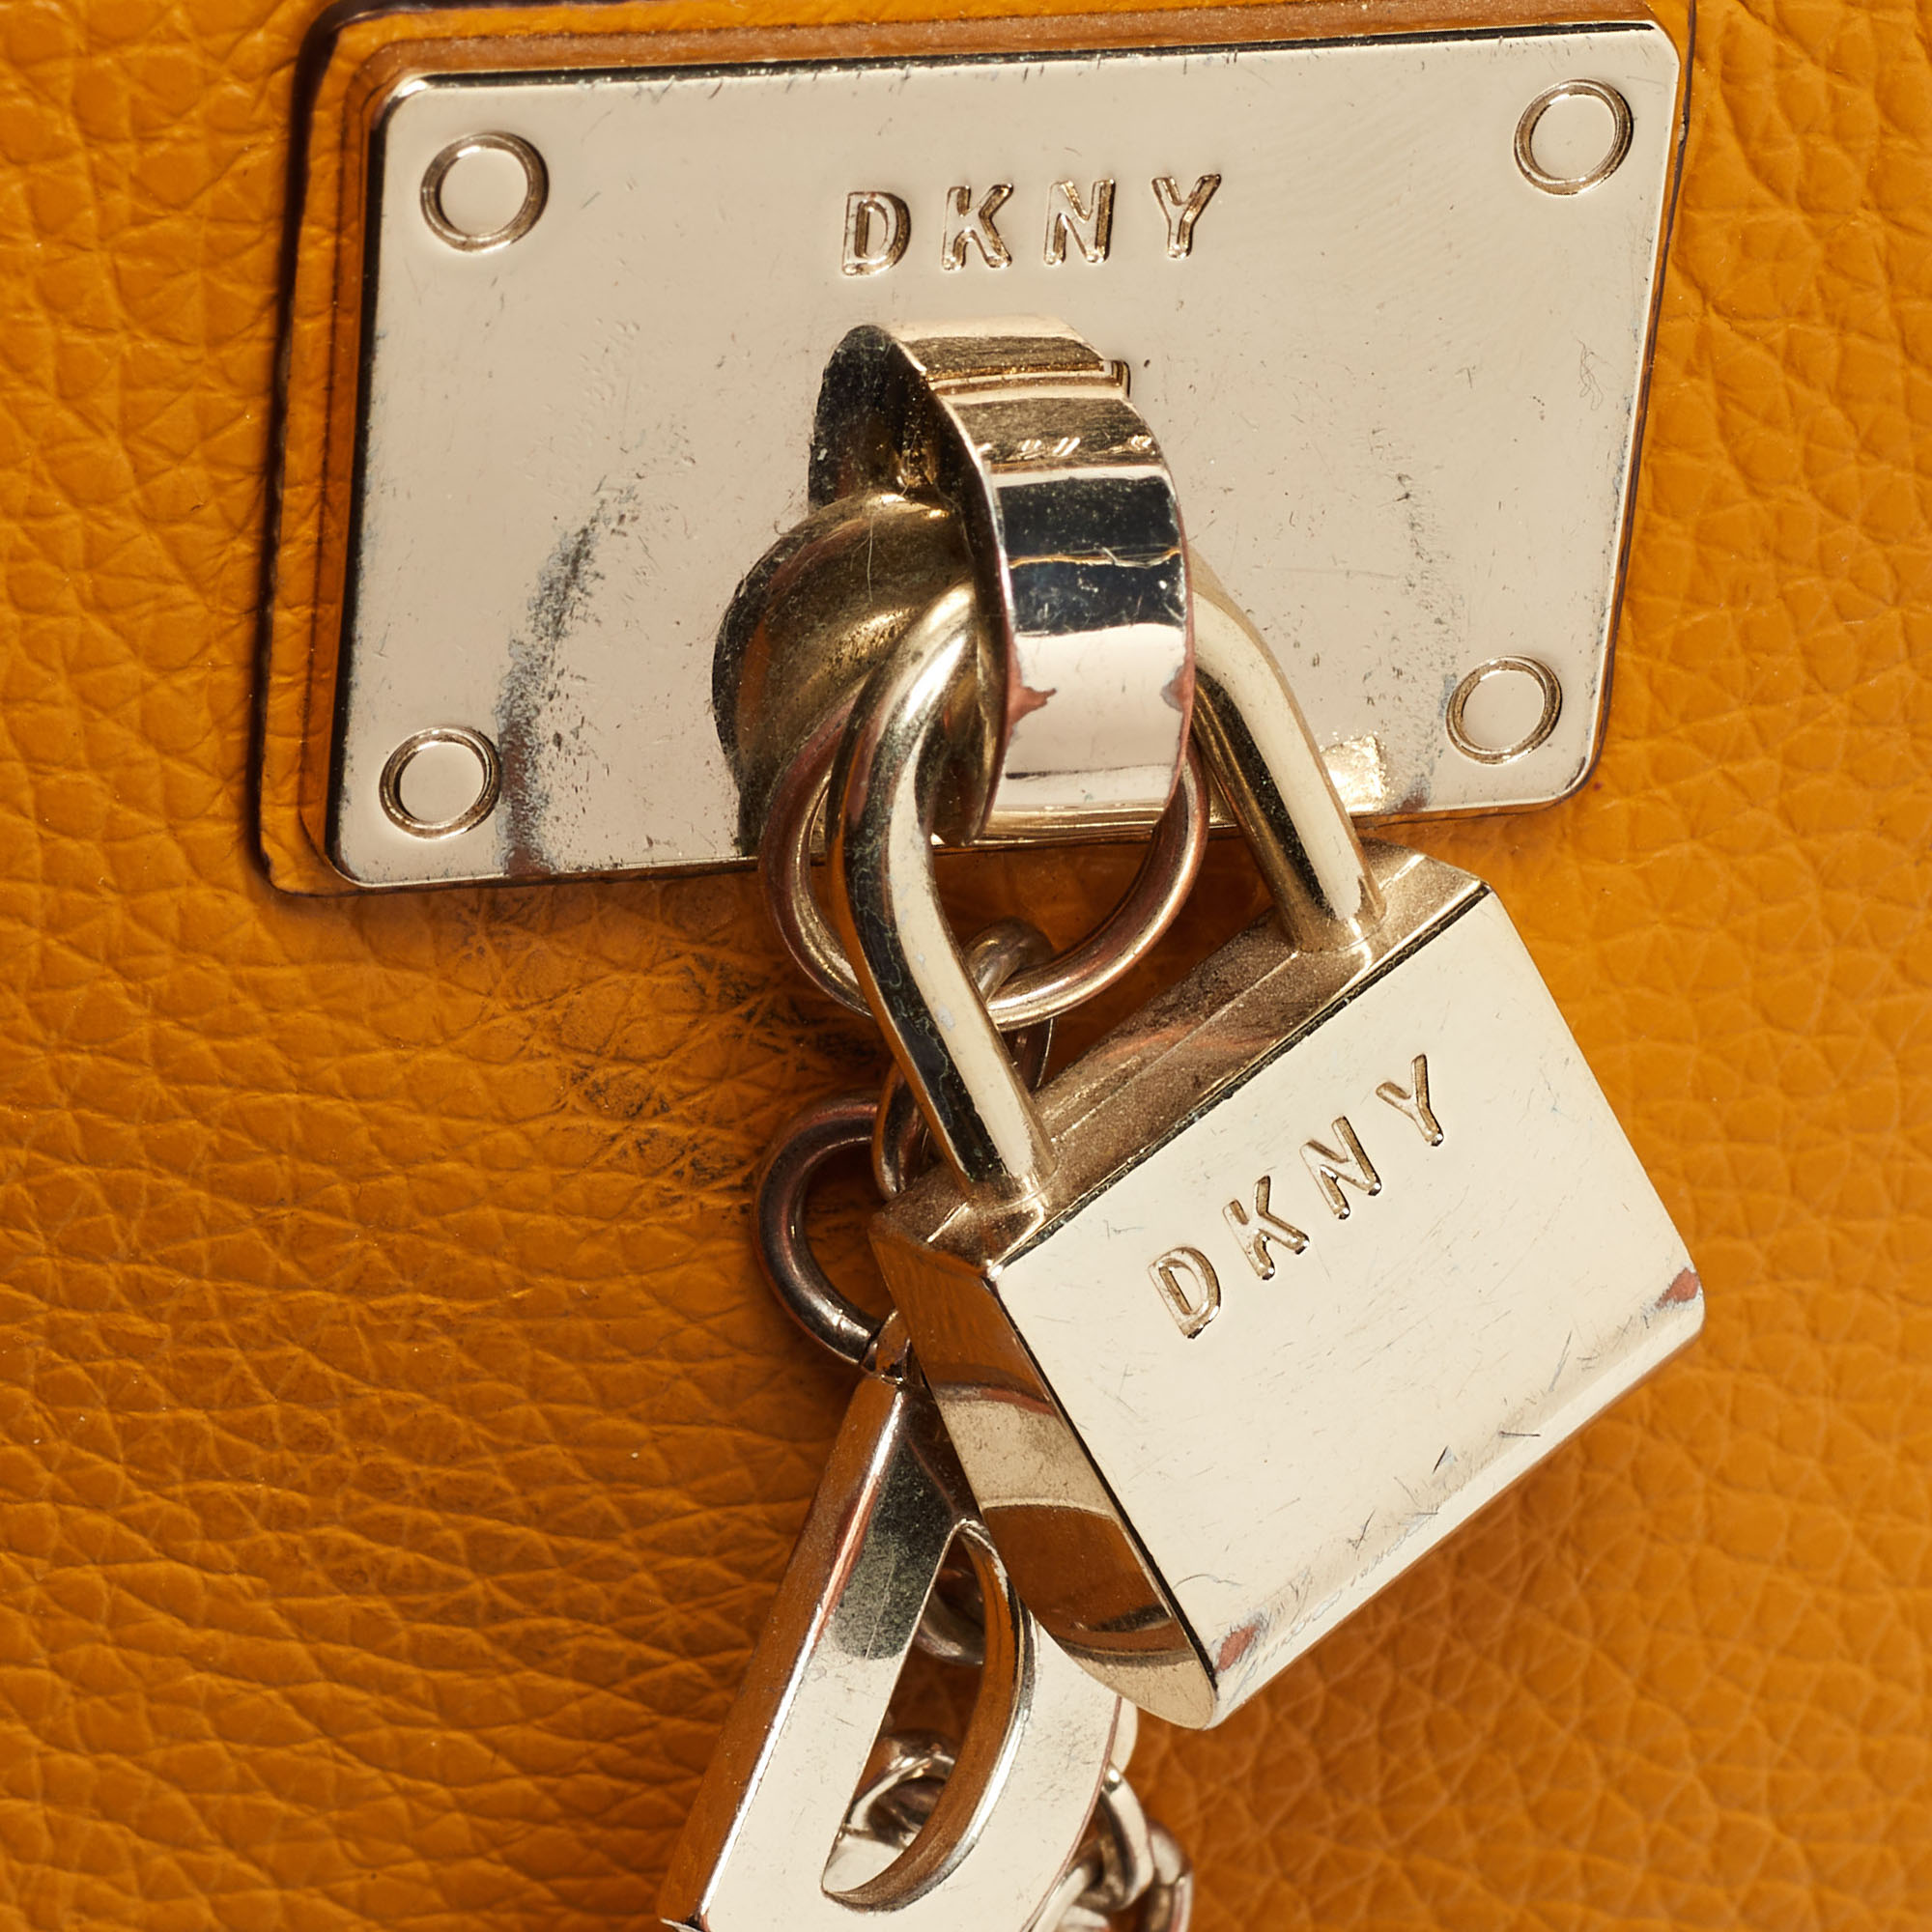 DKNY Mustard Leather Padlock Charm Camera Bag